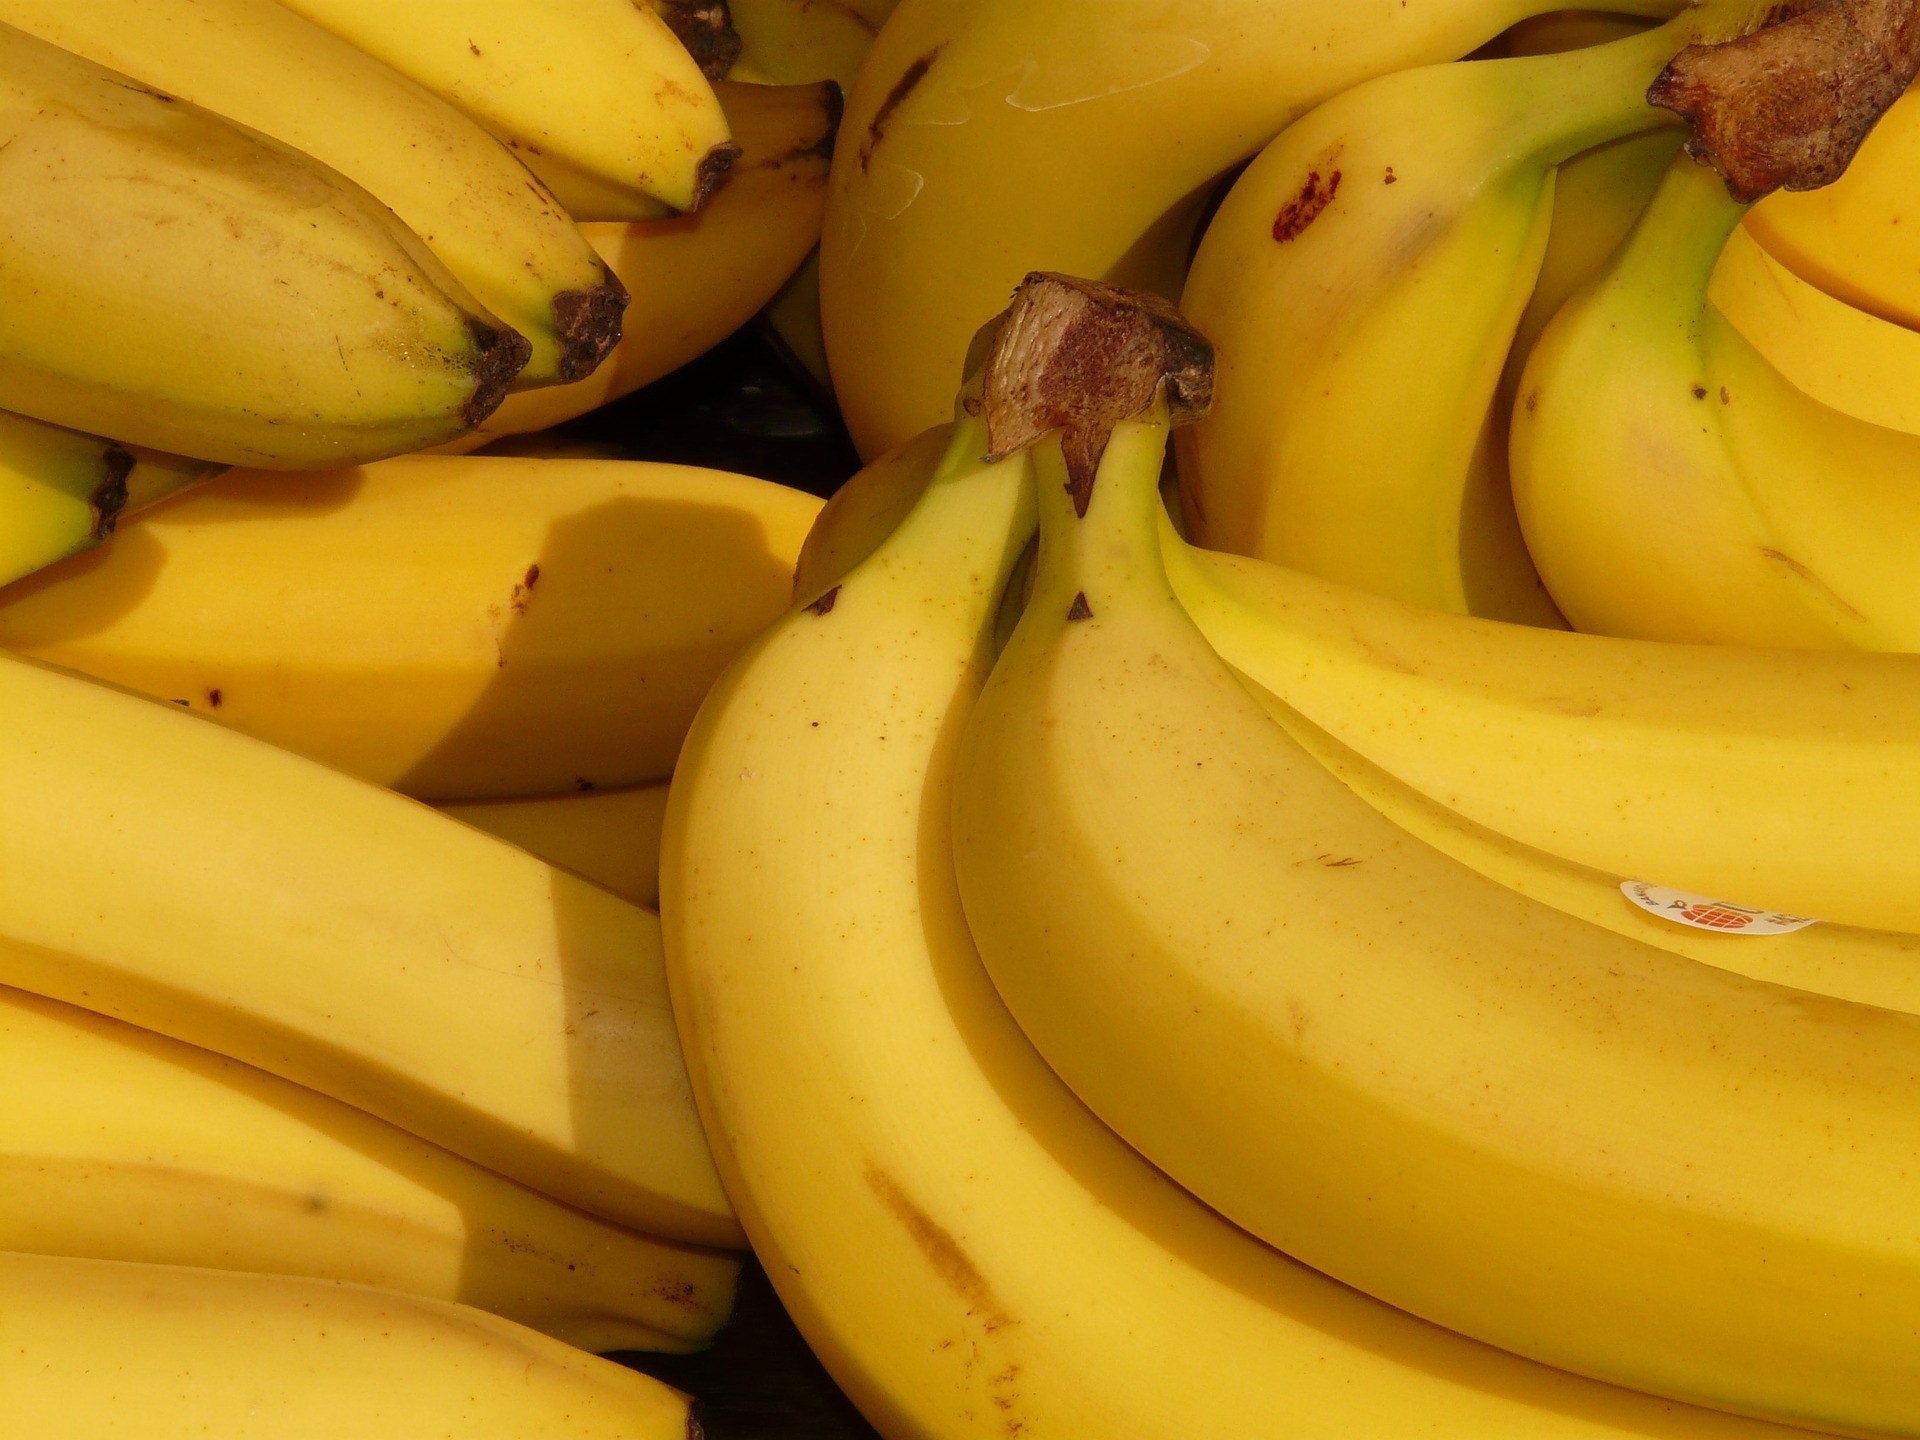 Compañía Dole despide a 111 trabajadores de bananeras en Limón a raíz del tipo de cambio